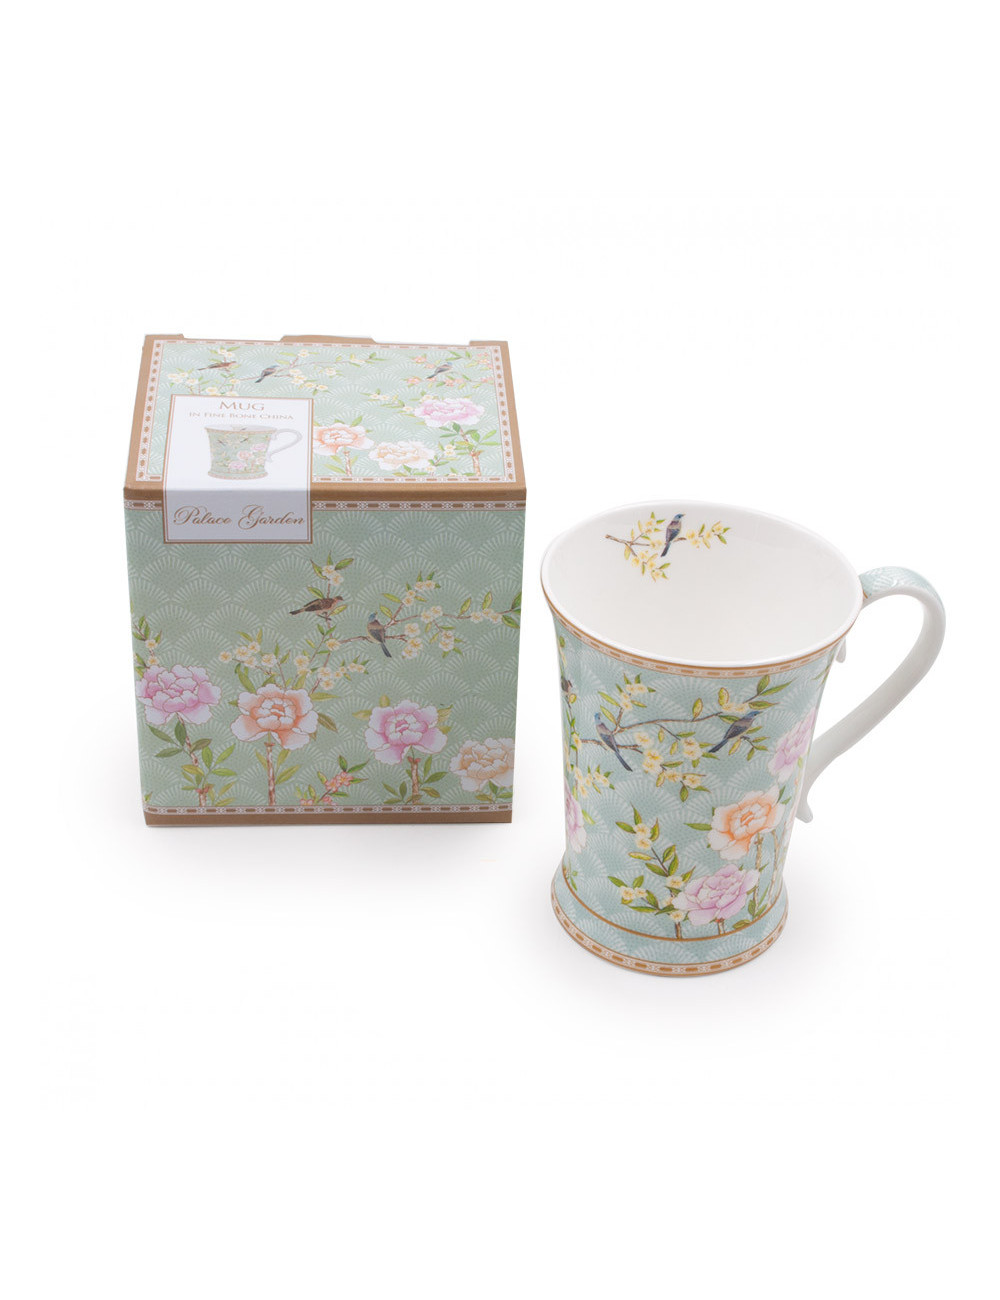 Mug vintage con decorazioni floreali Palace Garden - La Pianta del Tè shop online